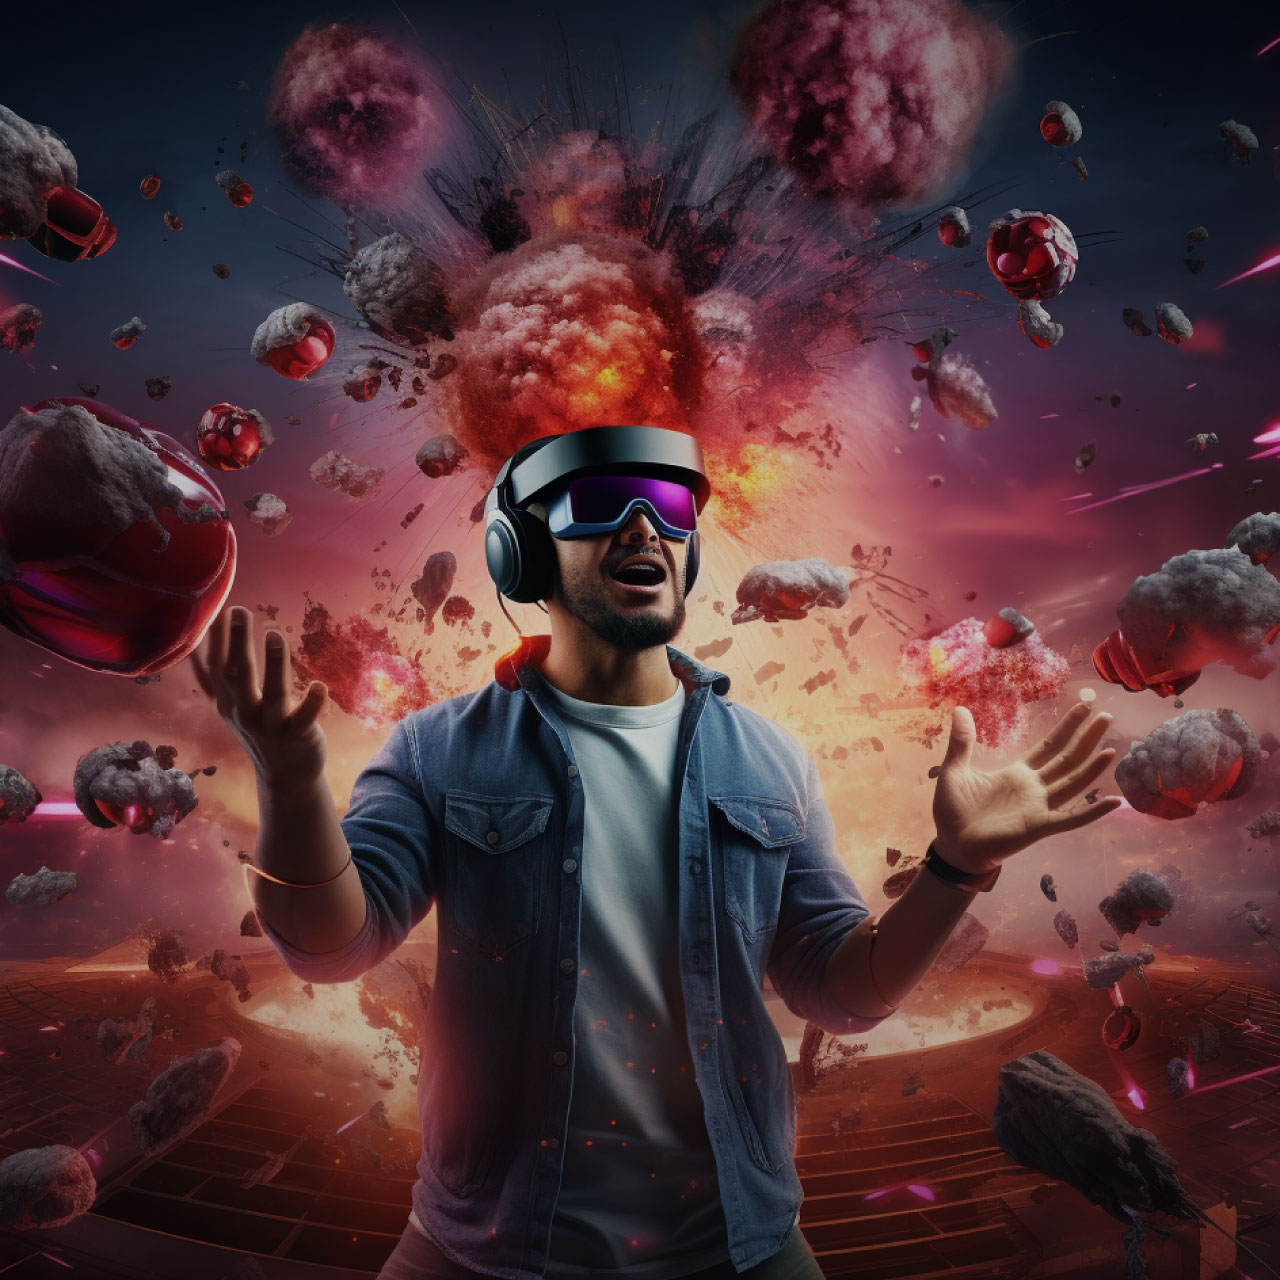 THE BOMB VR